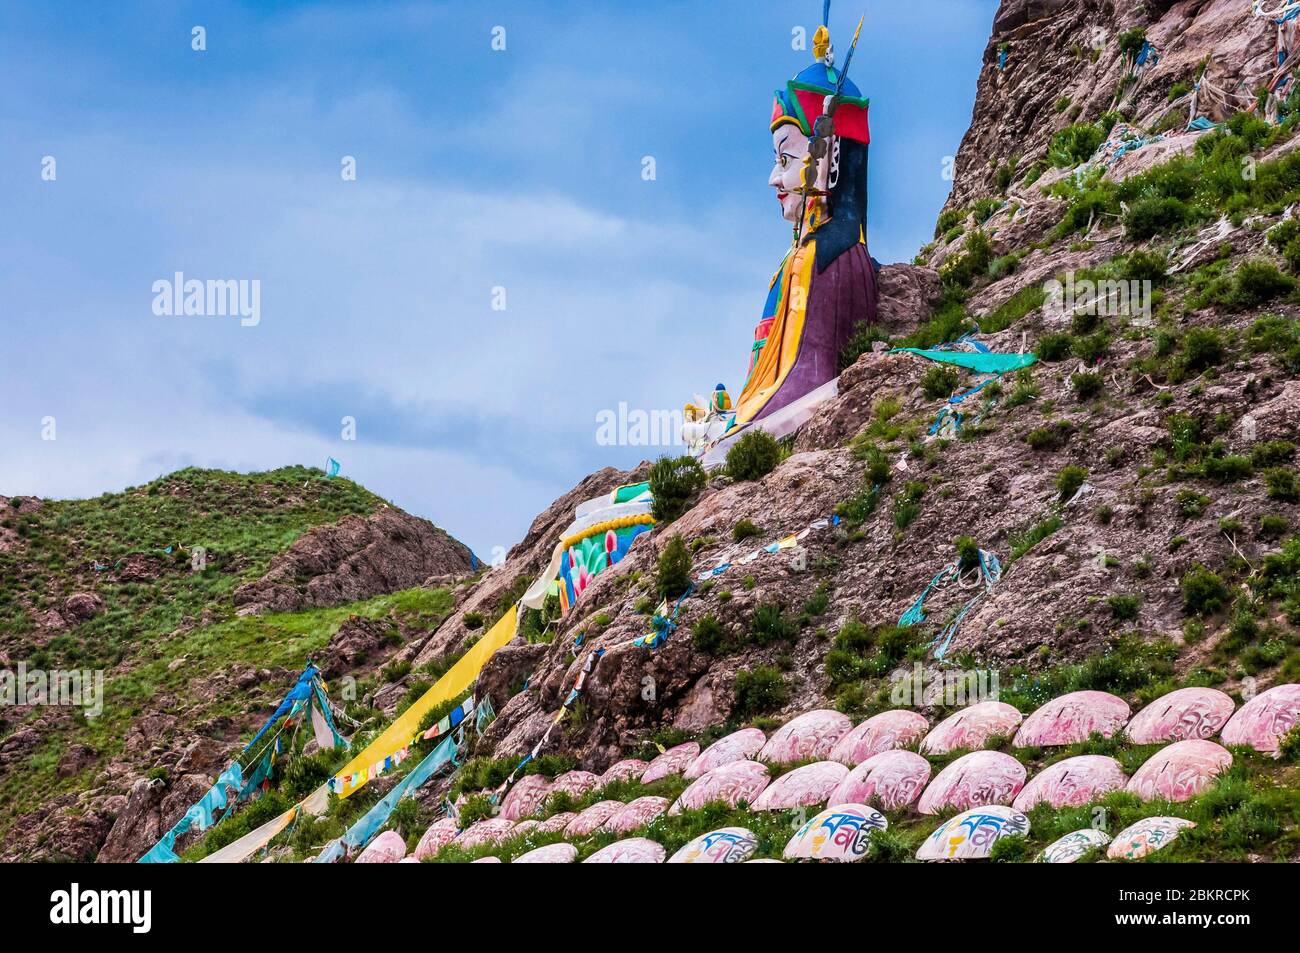 Cina, Tibet orientale, o Kham, Qinghai, Nagchu, tempio di Negyama e montagna sacra, statua di Gesar de Ling, il guerriero di Shambala Foto Stock